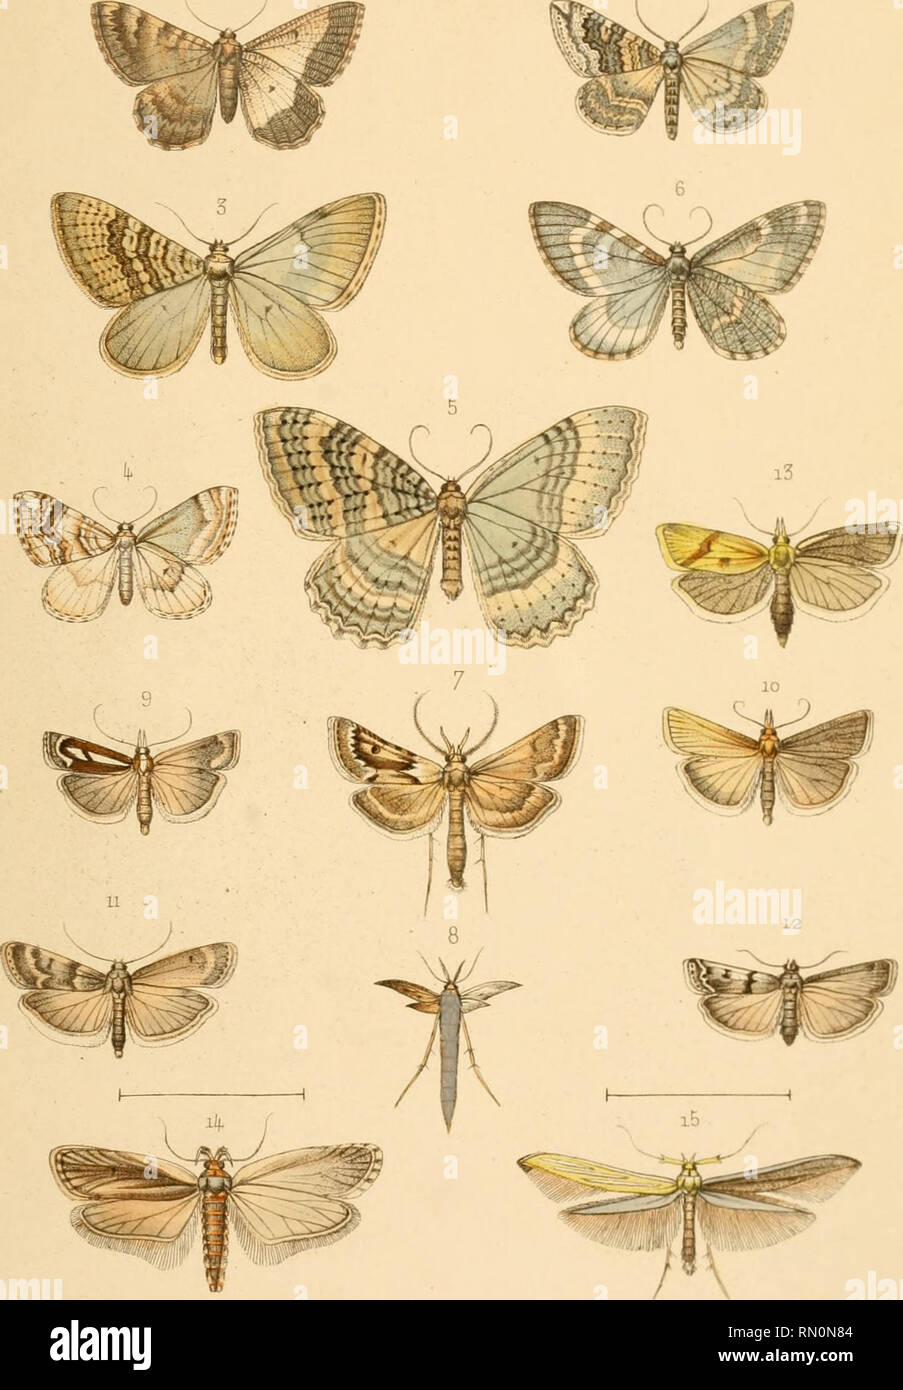 . Annales de la Société entomologique de Belgique. Insects; Entomology. Artruzled' de ItJ- J^octAte t^ntomoloffiaiie' de-£e^Cûue.. ù'rr,^M.I'l.R.. 1 Gnoplios Coch.à.axa^,Ied. 2 Ortliolitha vicinaria.i'a^. 3 Ariaitis opificata, led. . id. perpetuata, ^«/. 5 Triphosa Taorliata,^»a;. 6 Cidaria depeculata. Lai. 7 8 Cledeobia Armenialis. ê.ç ErJ. 9 Crambus Colchicelliis, Led.. 10 ii. laevifiatellufi, LeJ. u Myelois crepusculella,./f«^. 12 id. Tephrinella,./«^/. i5 Conrhjiis defectana, led. il), Depressaria ramosella, Seain/. i5 Coleopliora Caucasica, Sfat/u. ii^Mraneaua&gt; col. Please note th Stock Photo